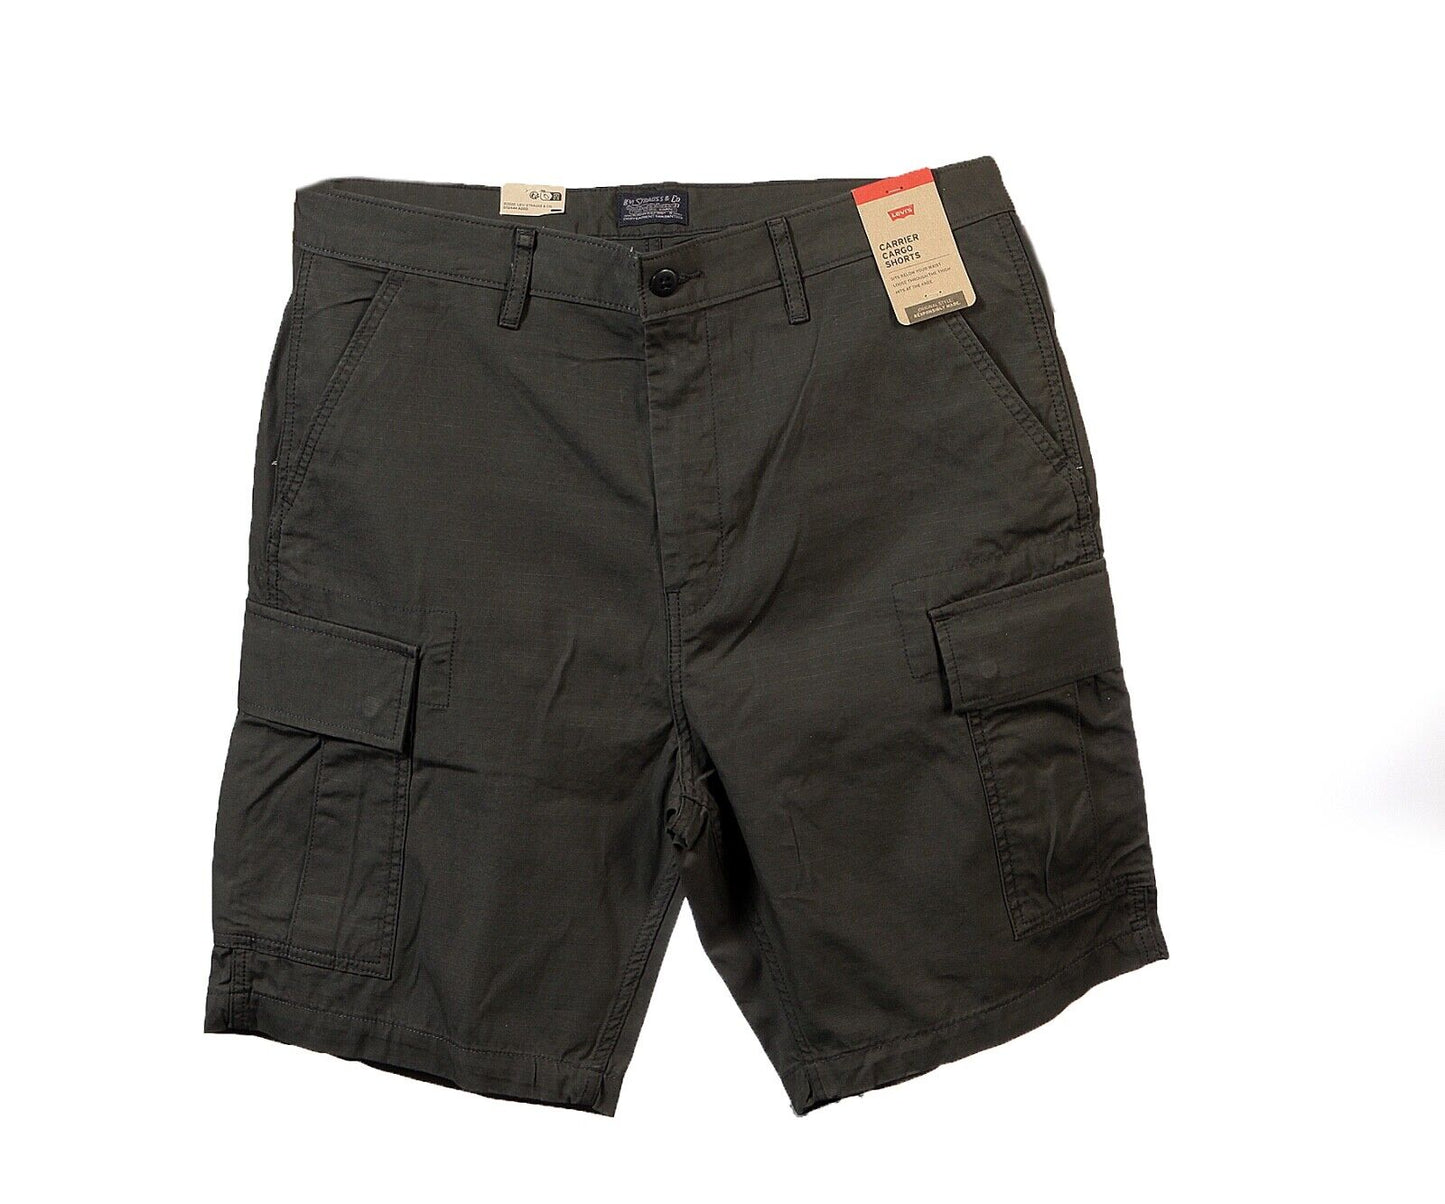 Levi’s Men’s Carrier Cargo Shorts I Wash: Graphite I Style: 23251-0060